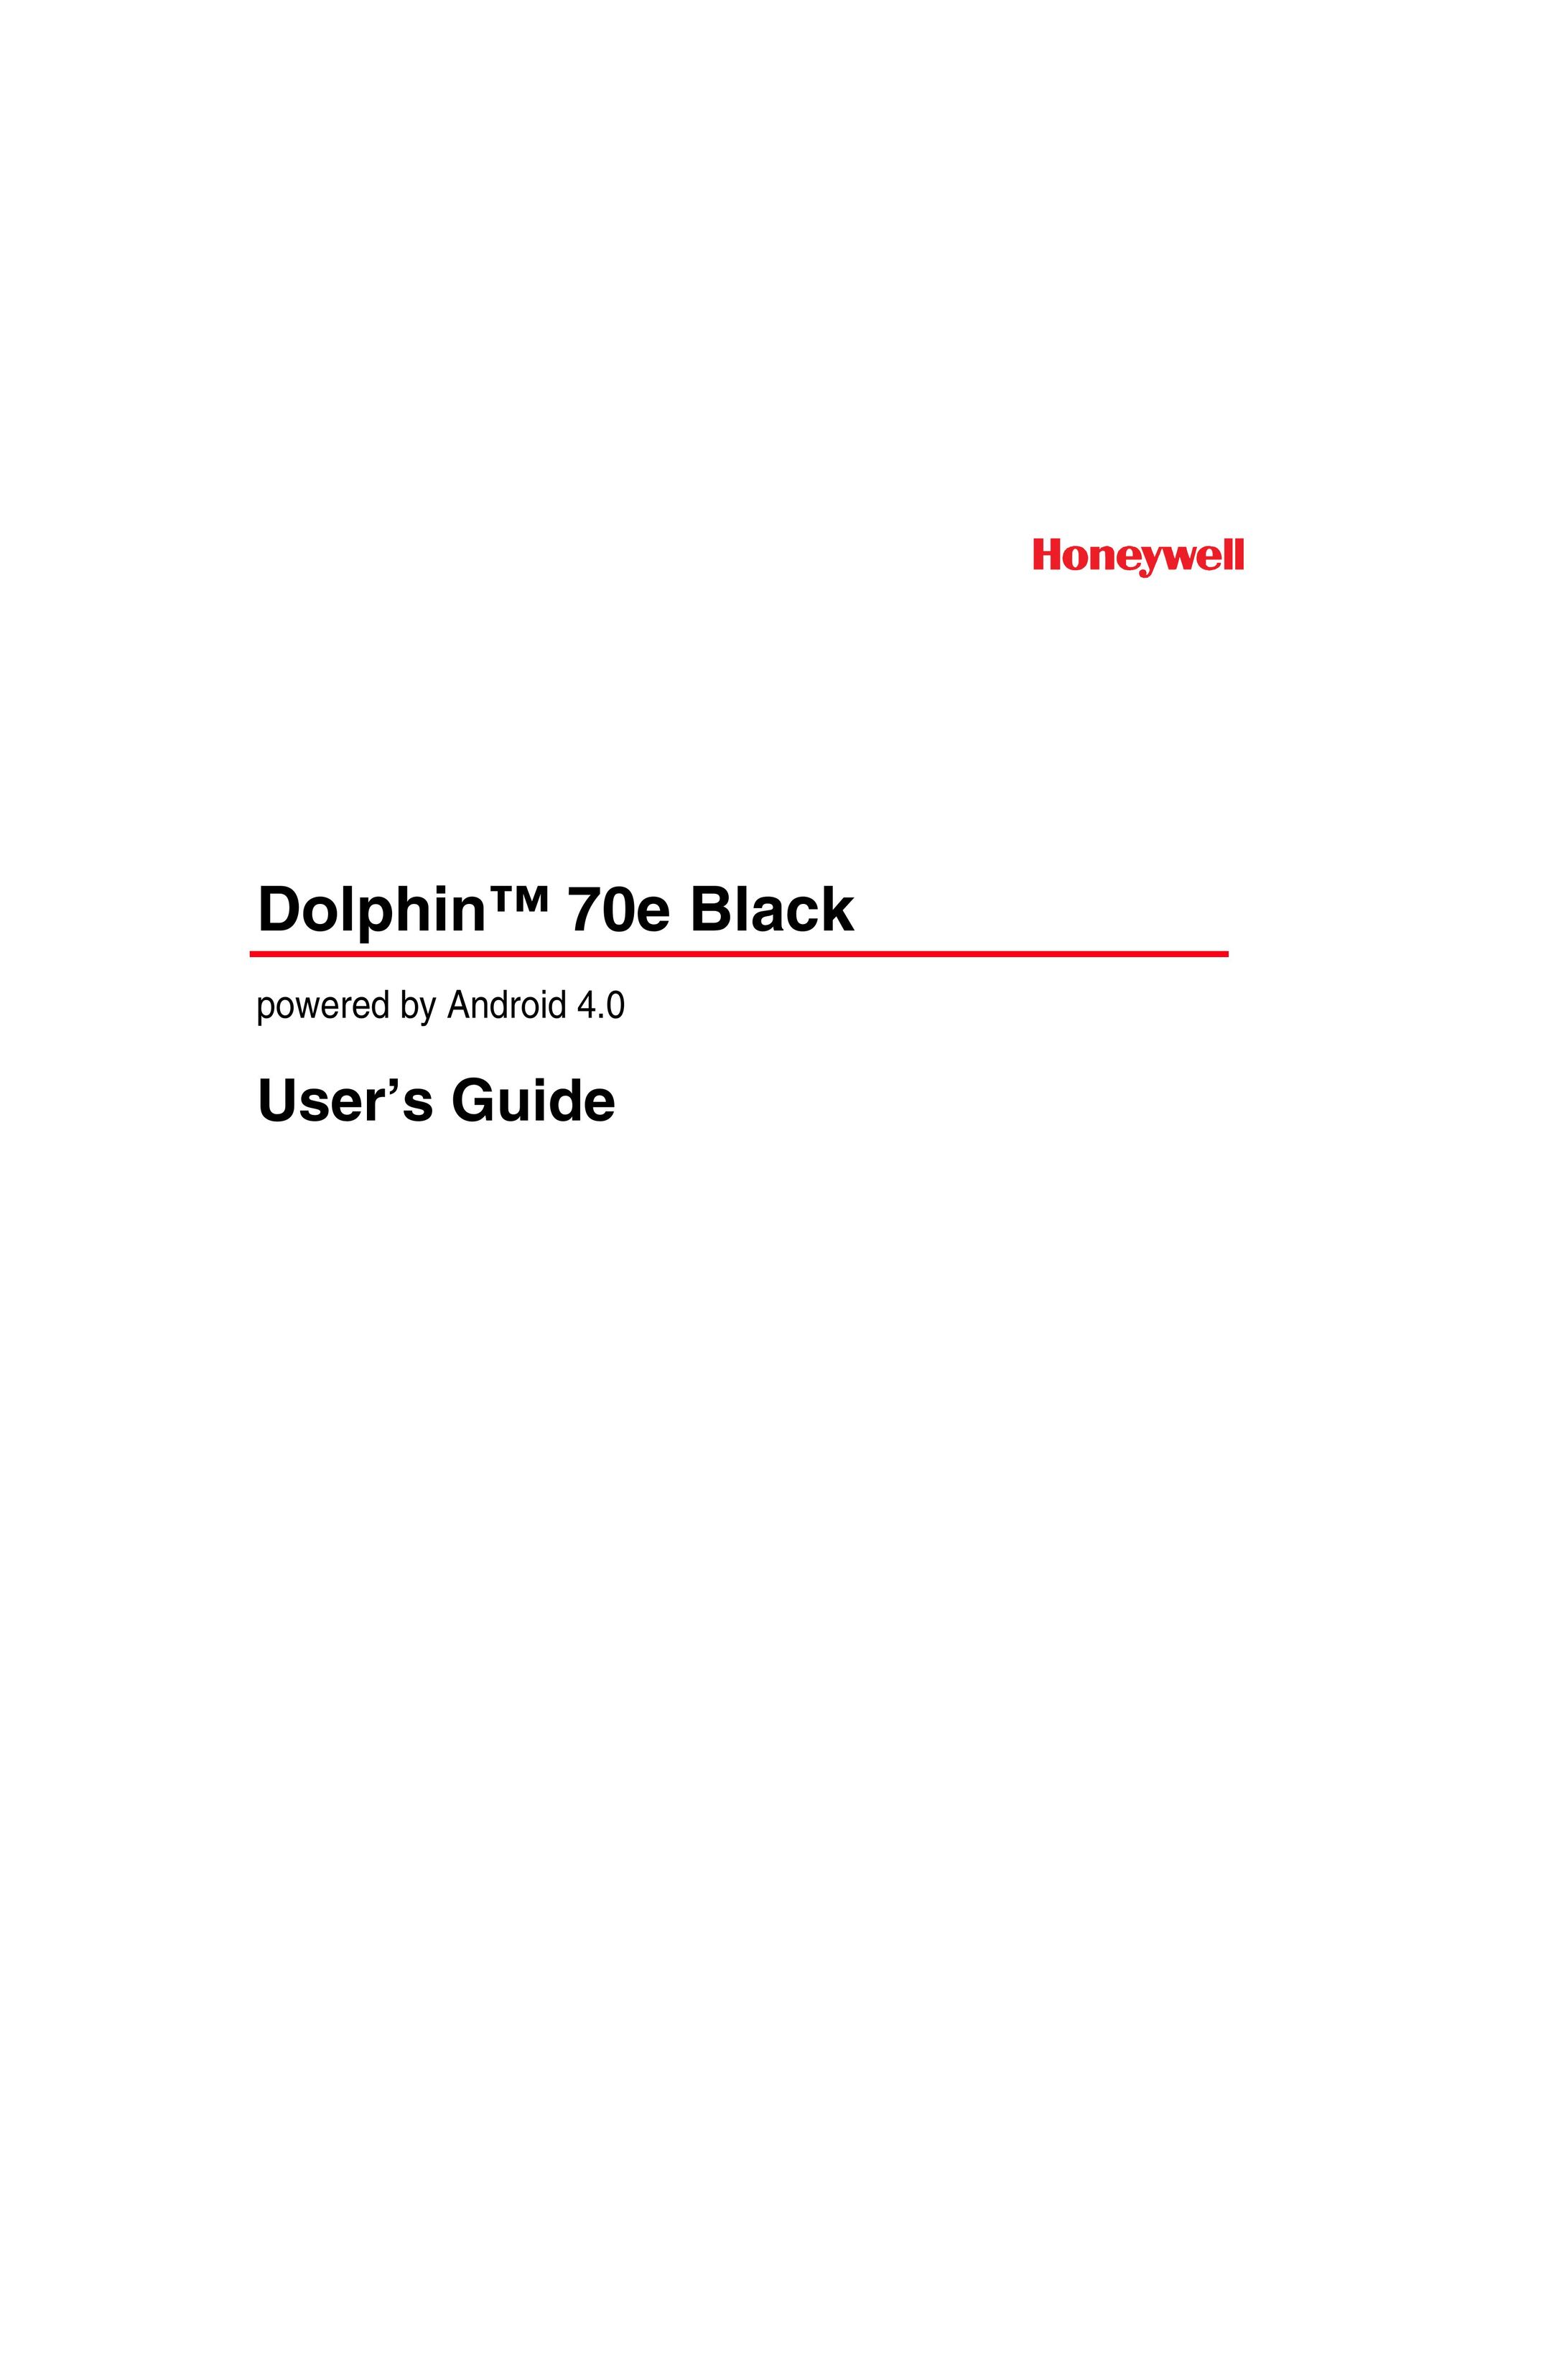 Honeywell 70e Cell Phone User Manual